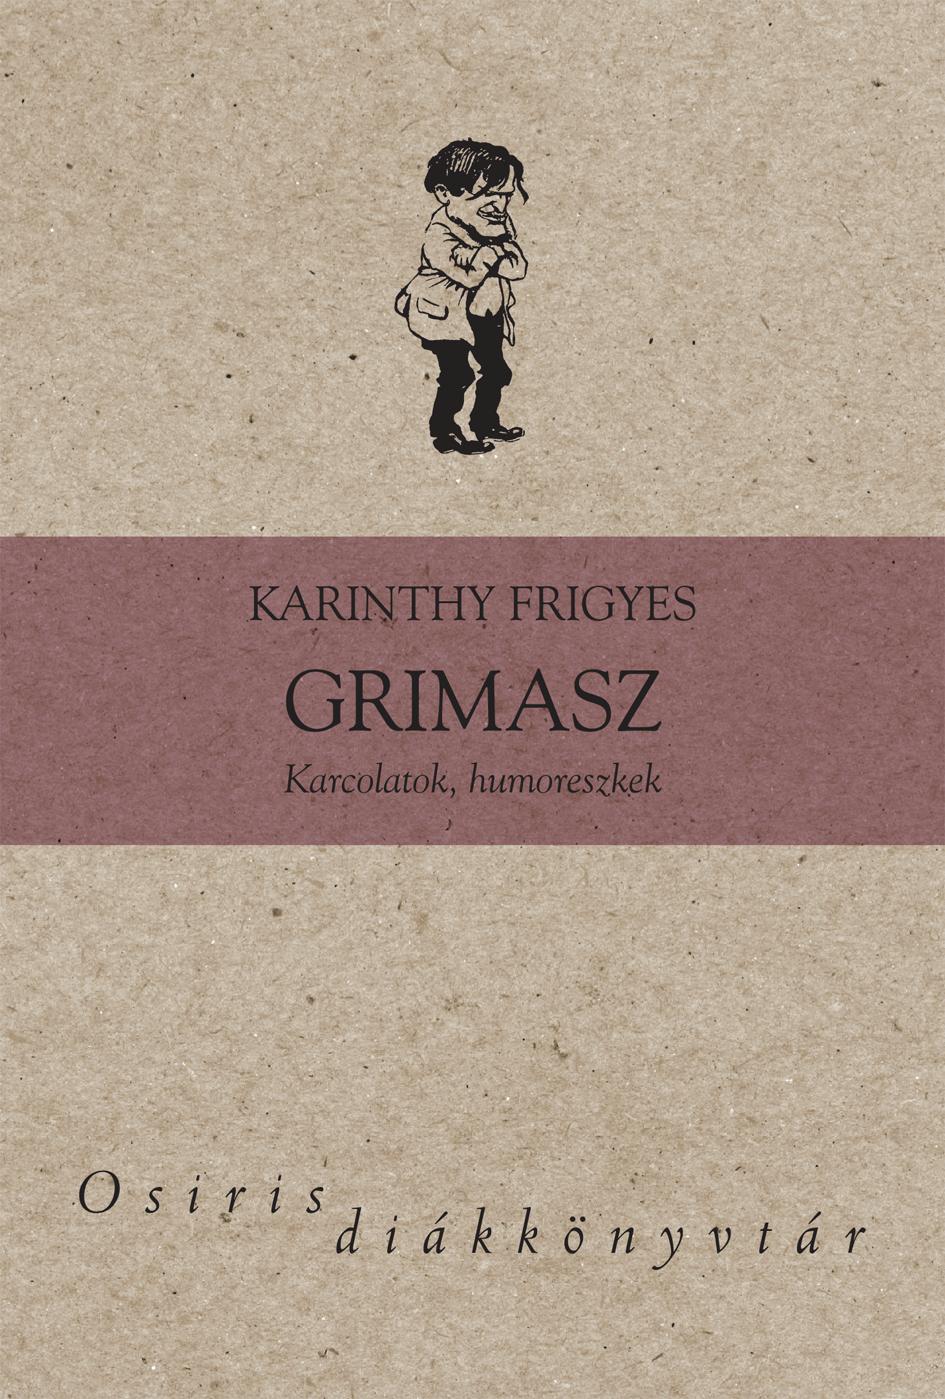 Karinthy Frigyes - Grimasz